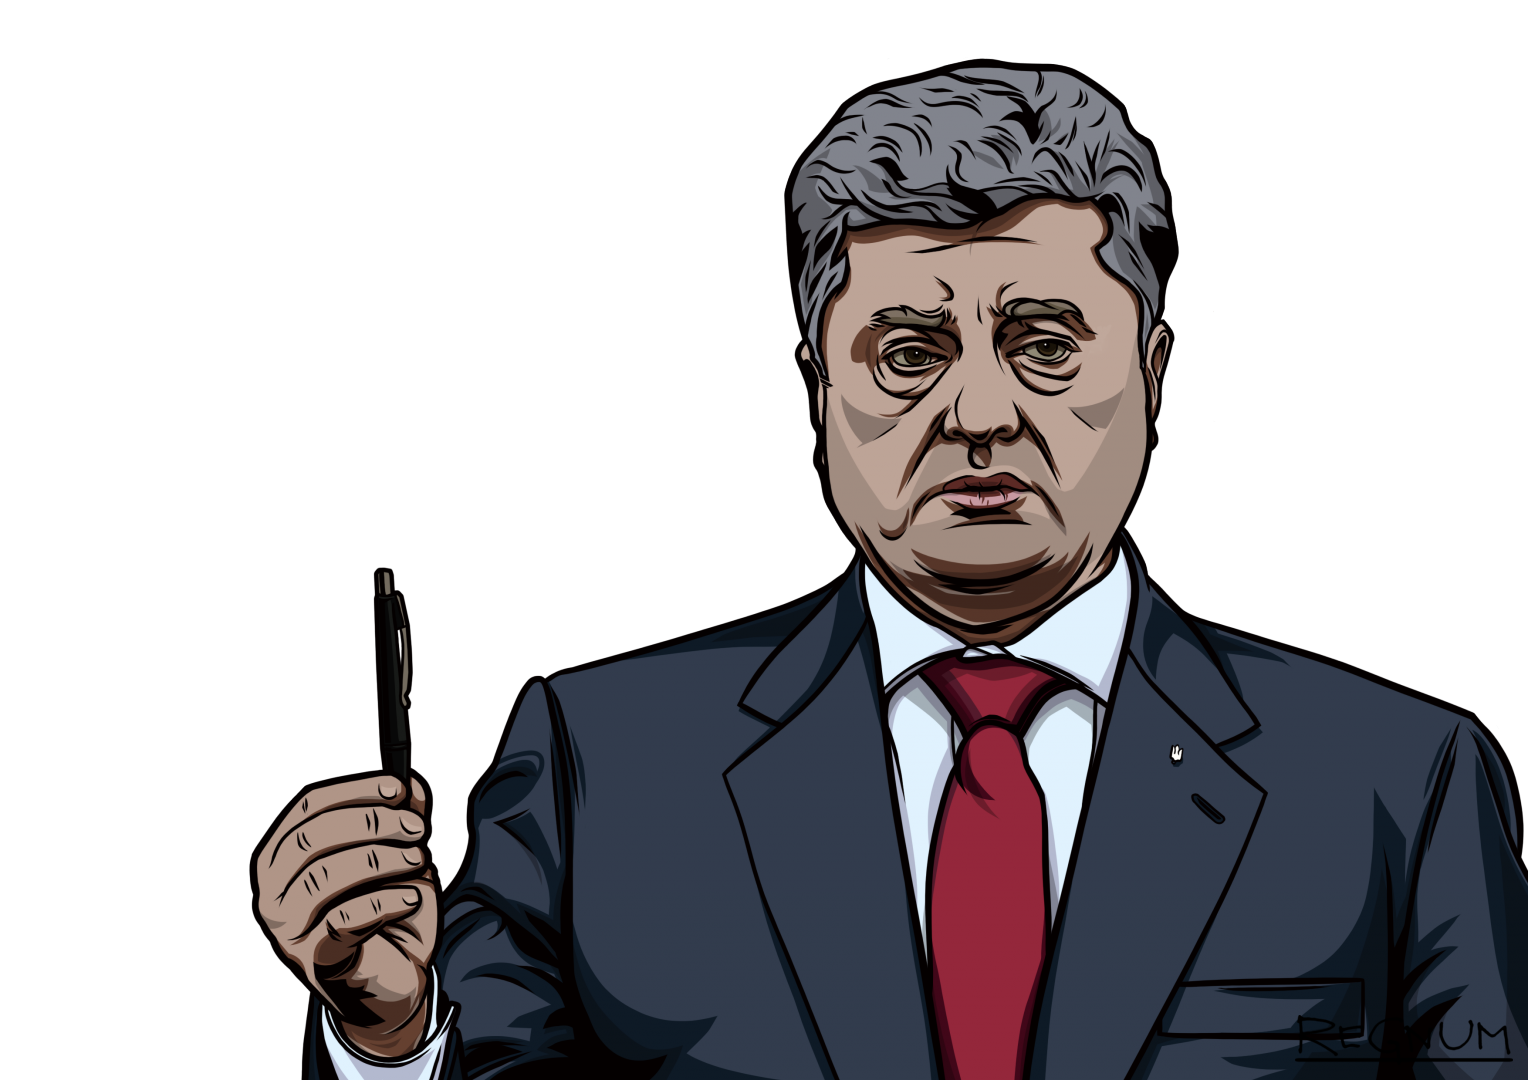 Ukraine States United Poroshenko Of Agency Regnum Clipart